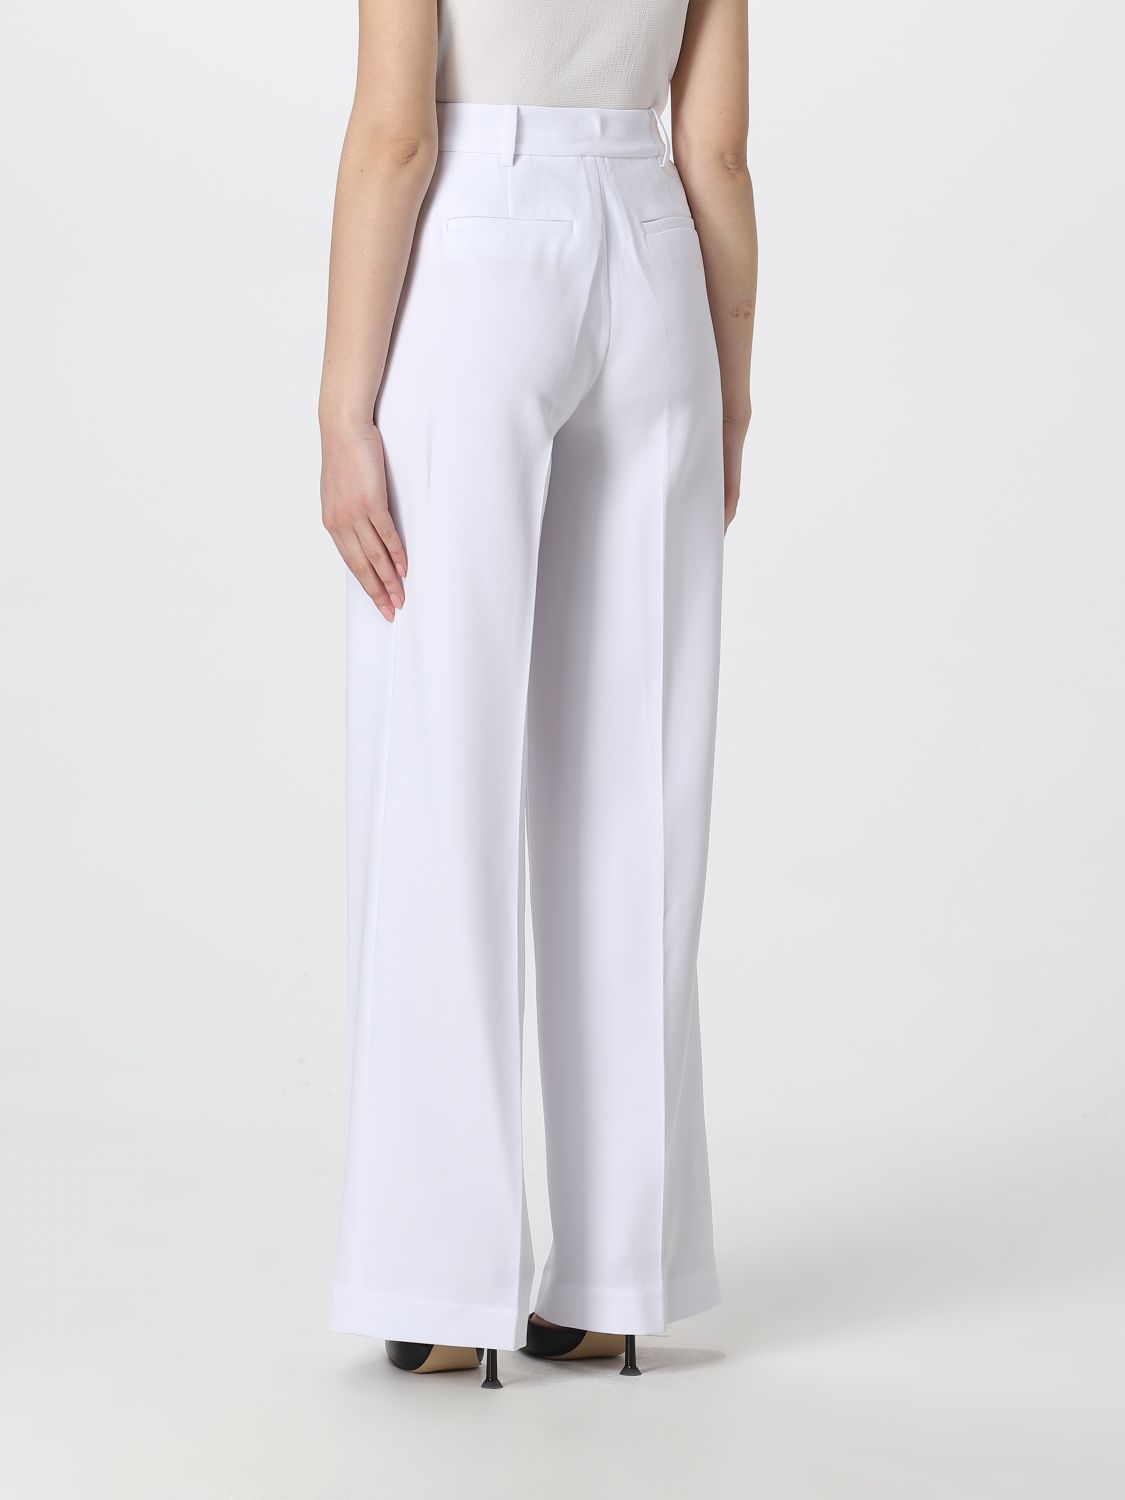 MICHAEL KORS: pants for woman - White | Michael Kors pants MS330H2ENX ...